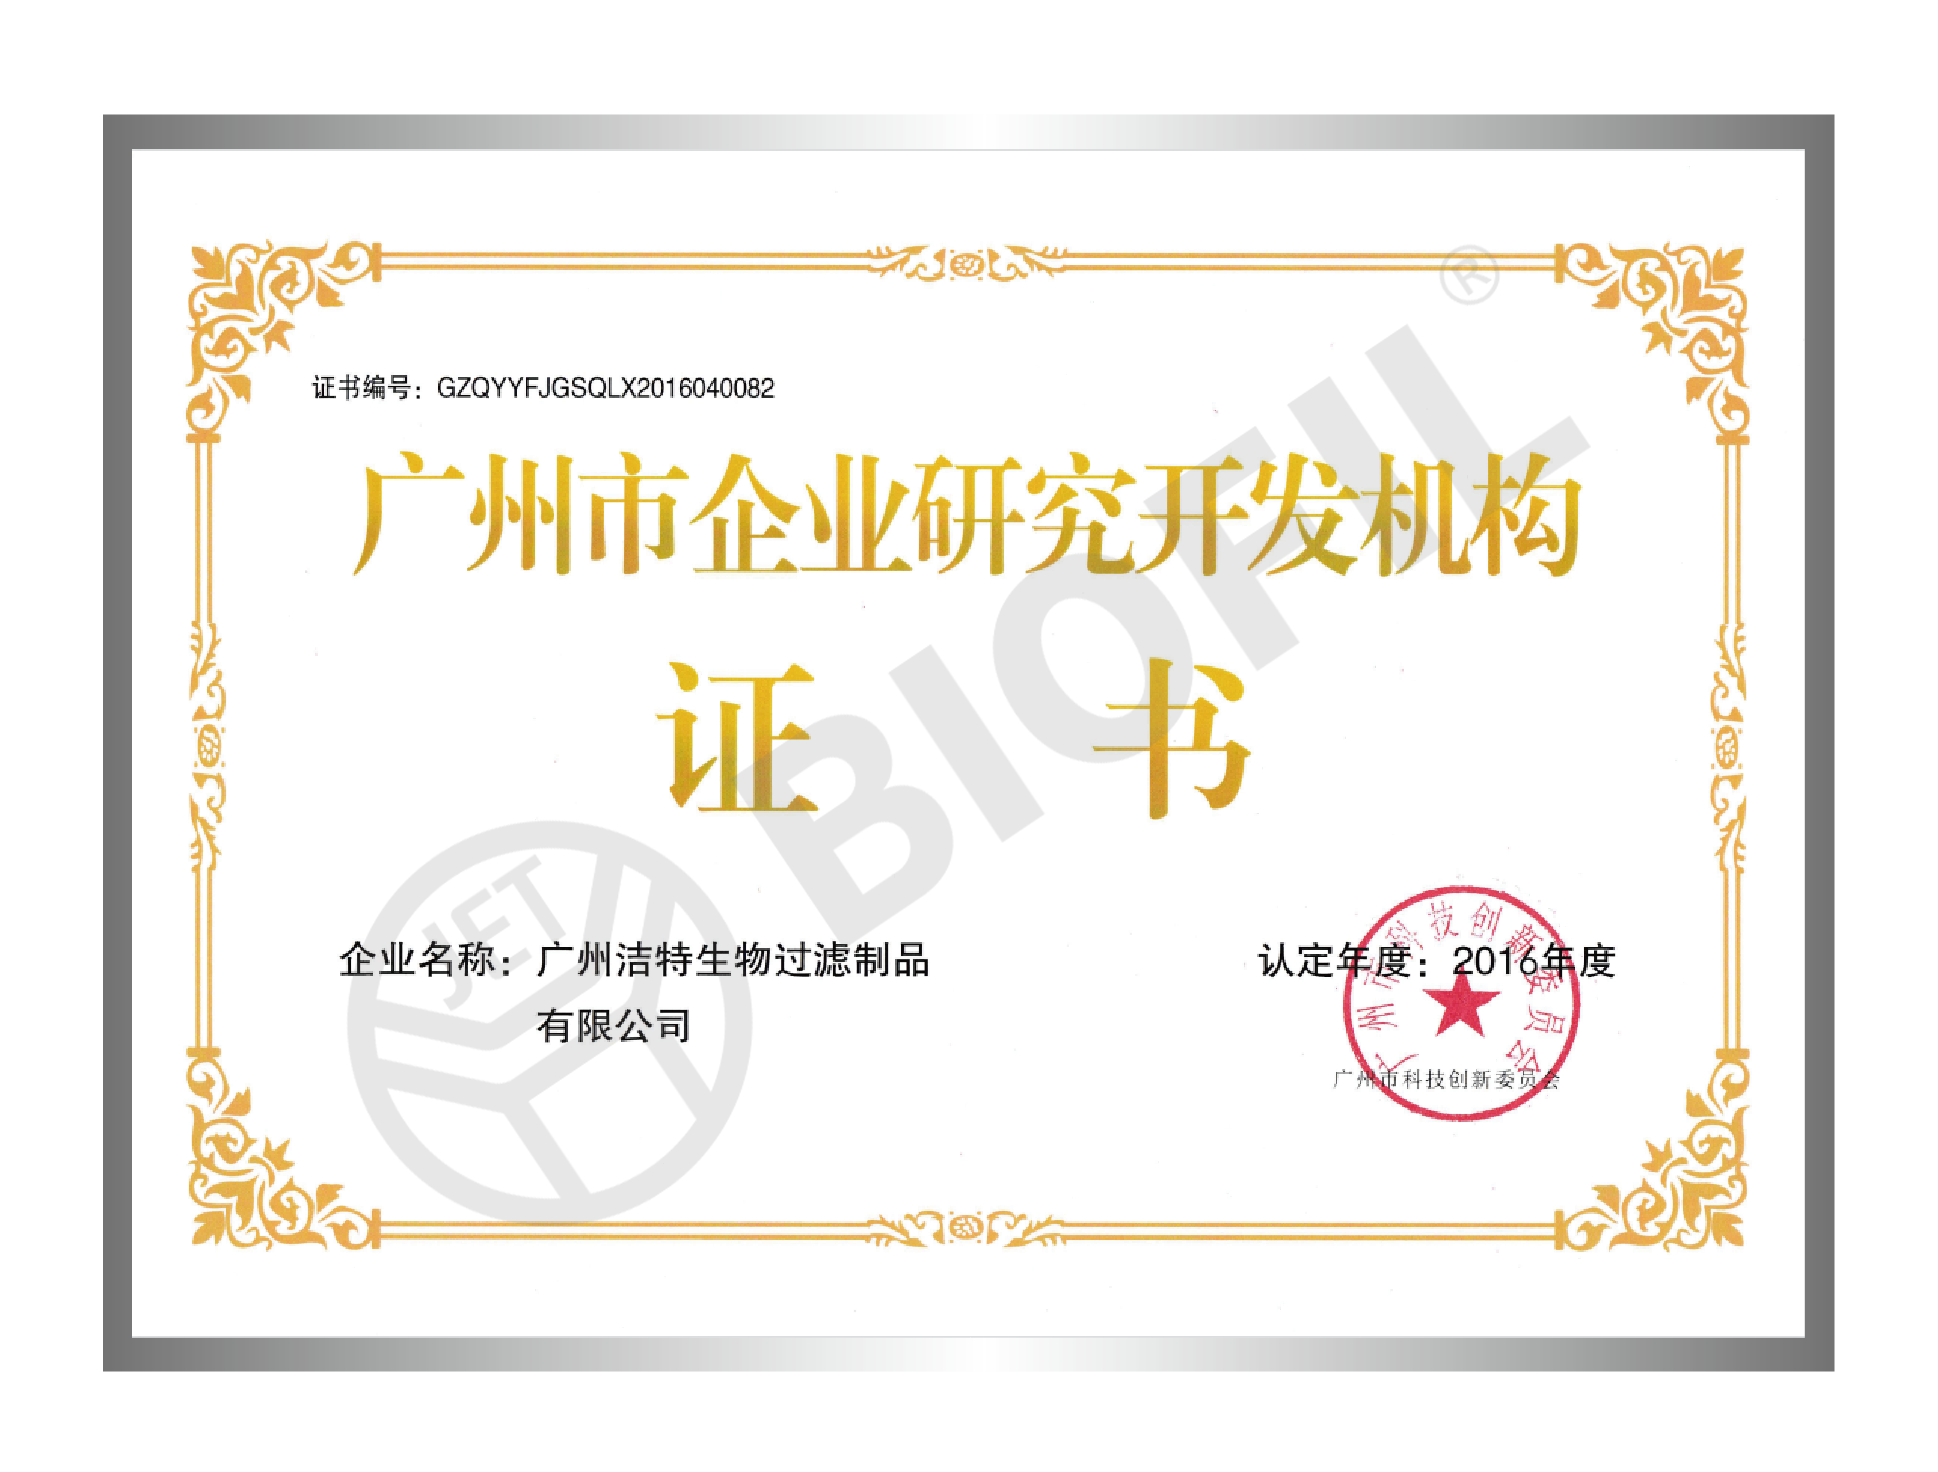 Certificate of Guangzhou Enterprise Research and Development Institution